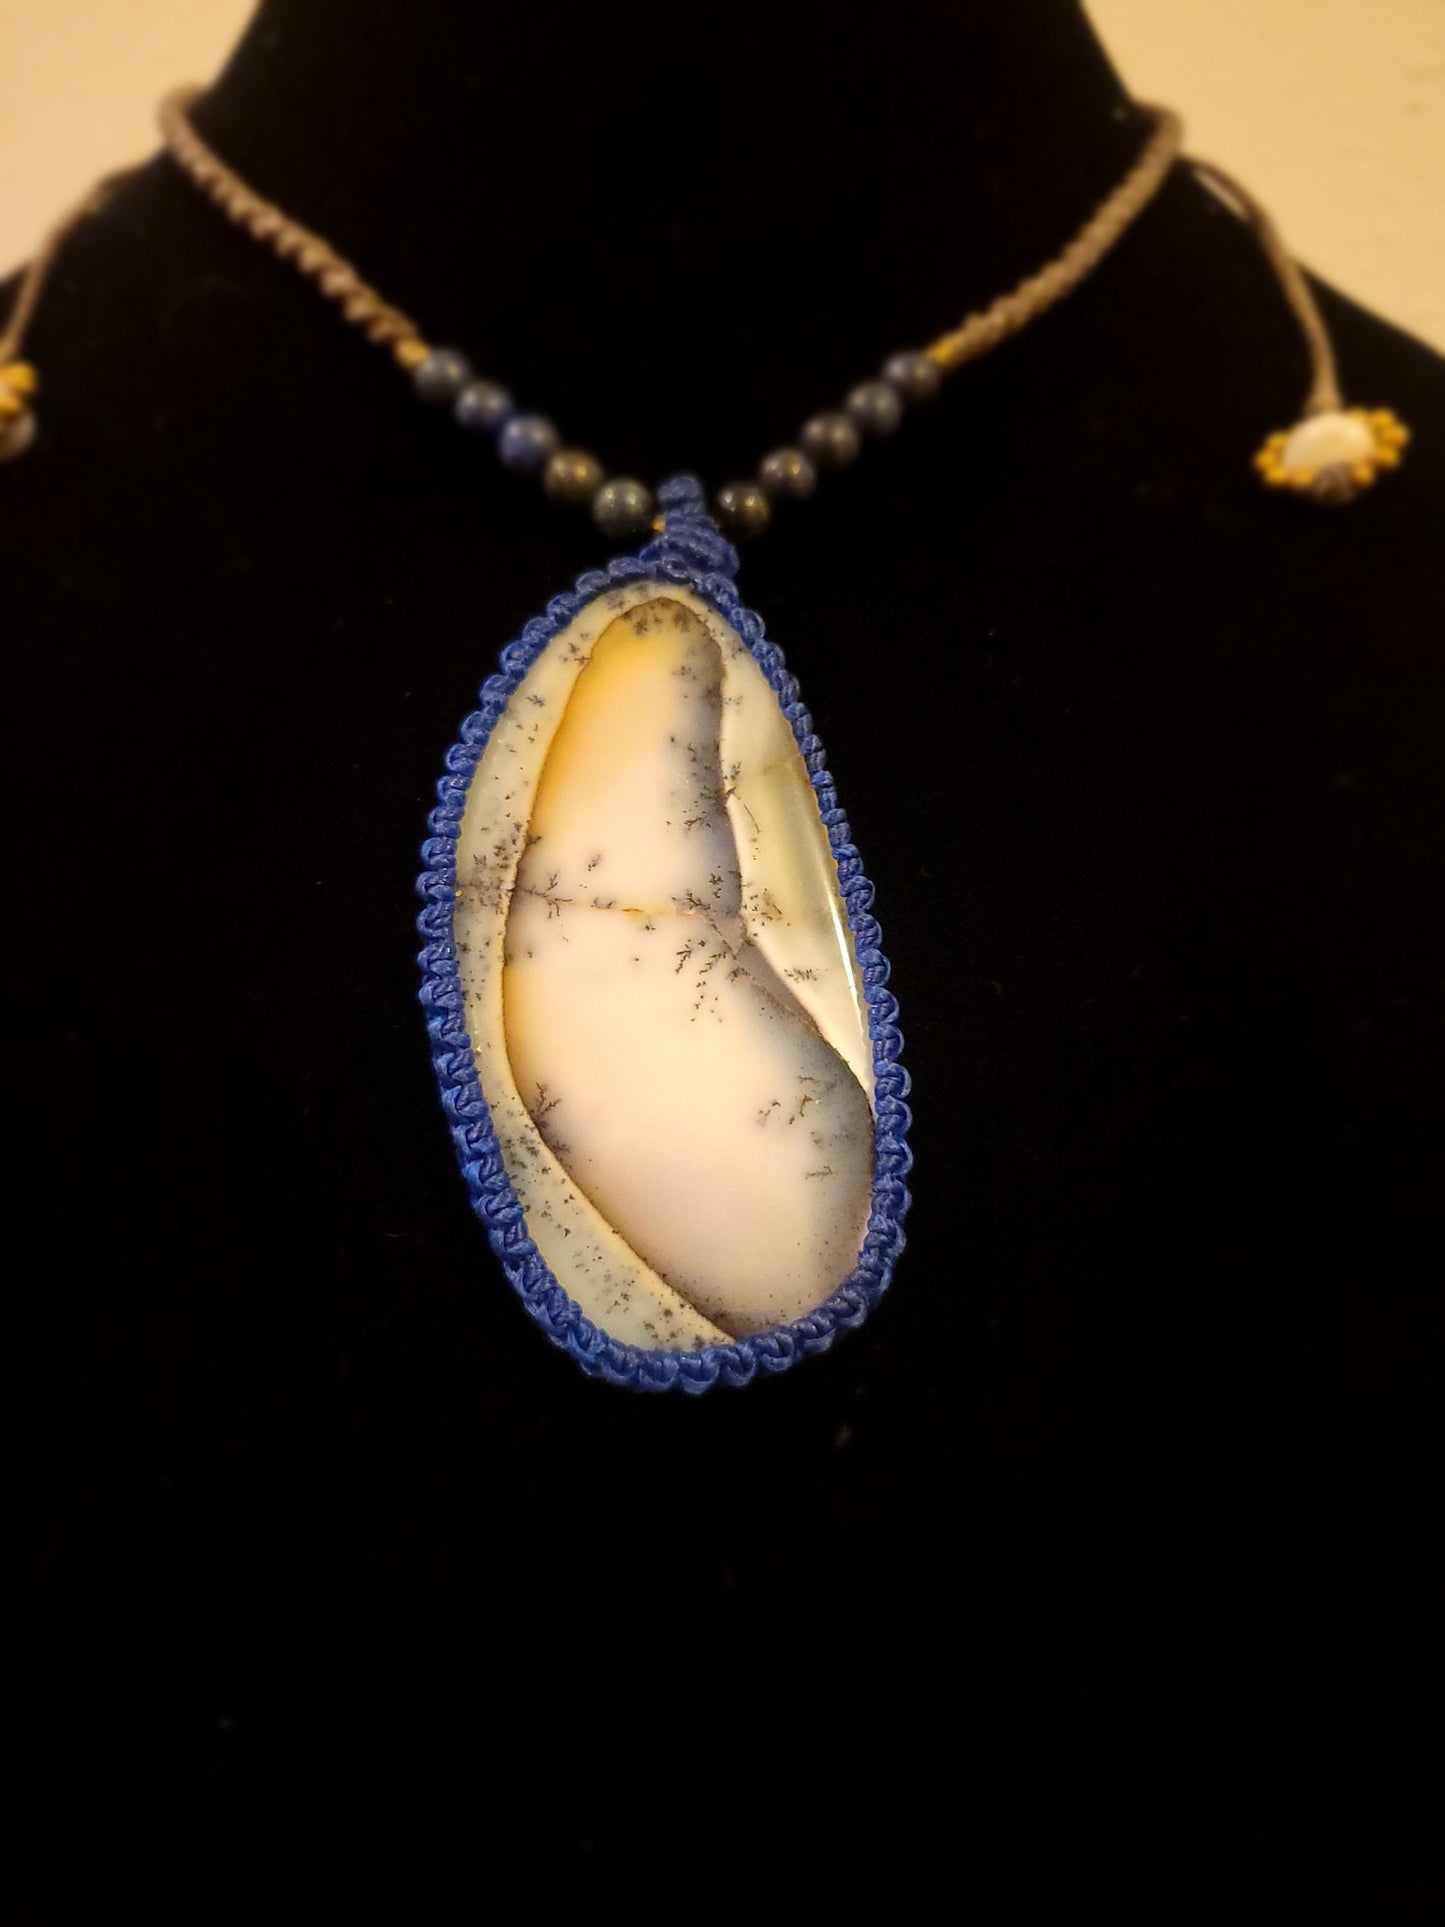 White Dendritic Opal Pendant Necklace - Black Accents & Lapis Lazuli Beads - Elegant Spiral Wrap - Boho Hippie Jewelry